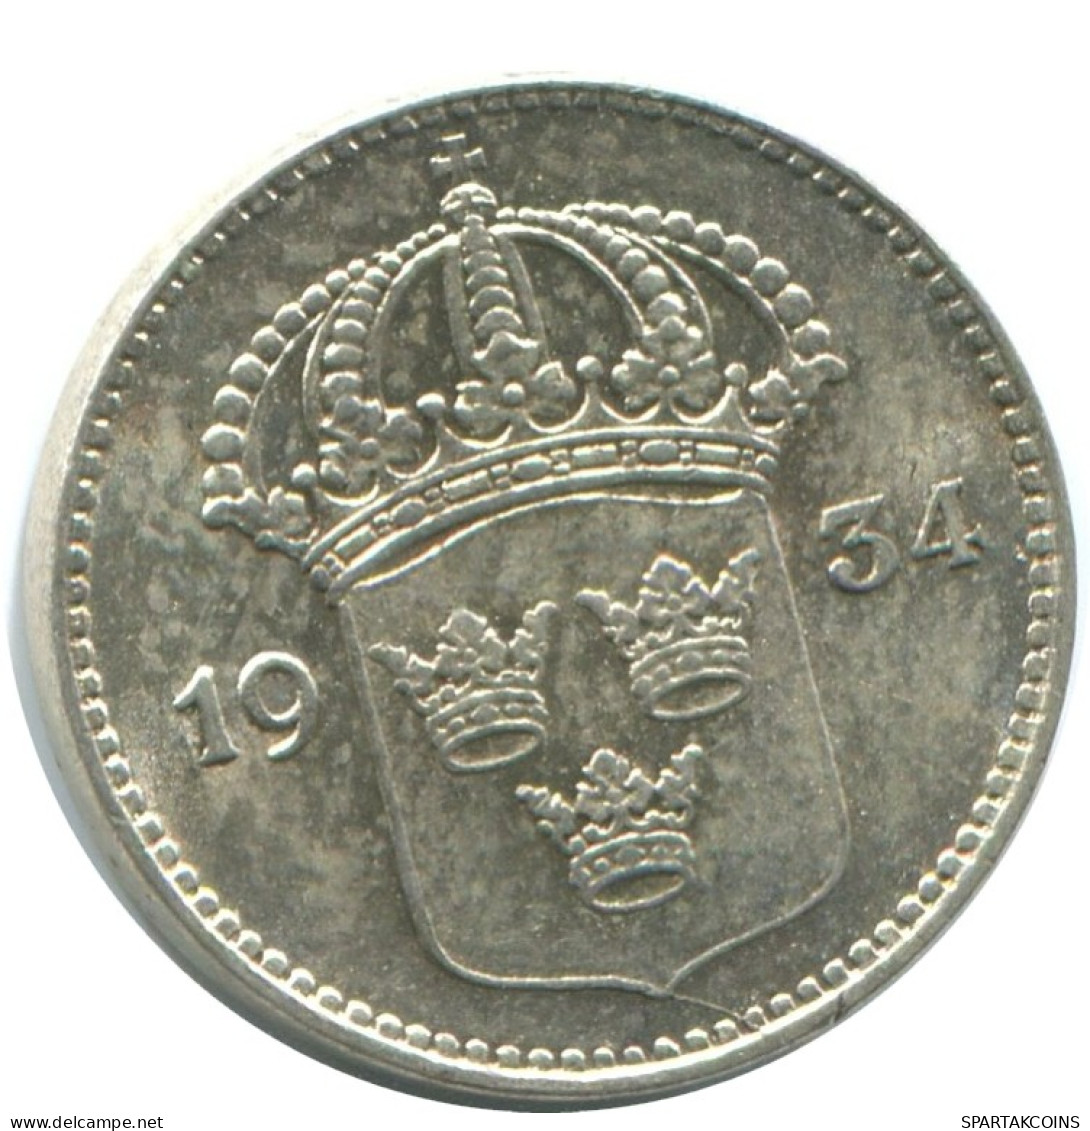 10 ORE 1934 SWEDEN SILVER Coin #AD089.2.U.A - Schweden